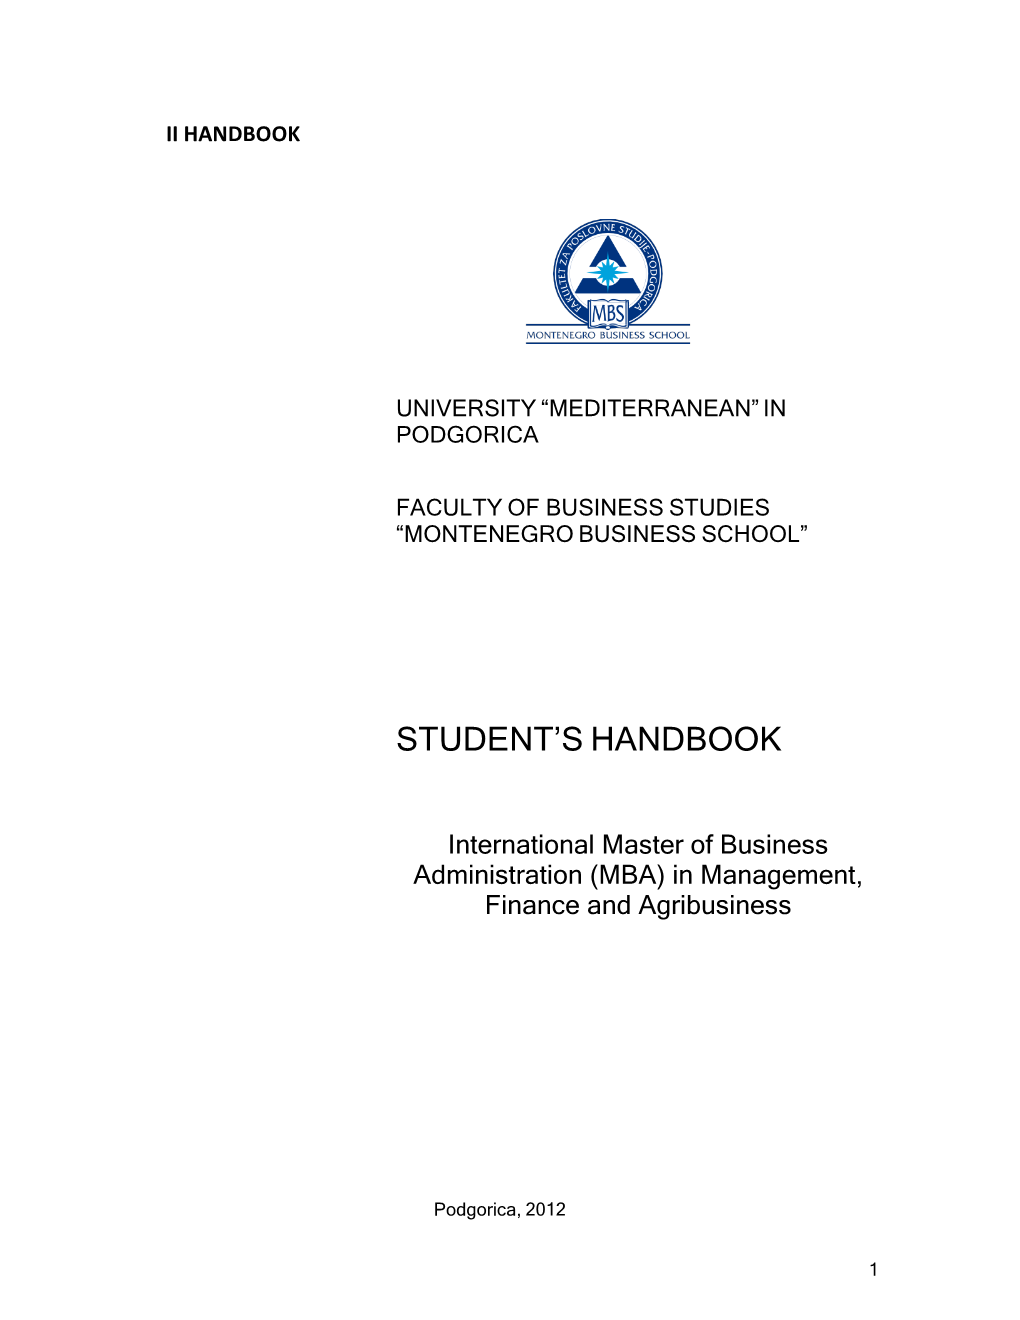 Student's Handbook